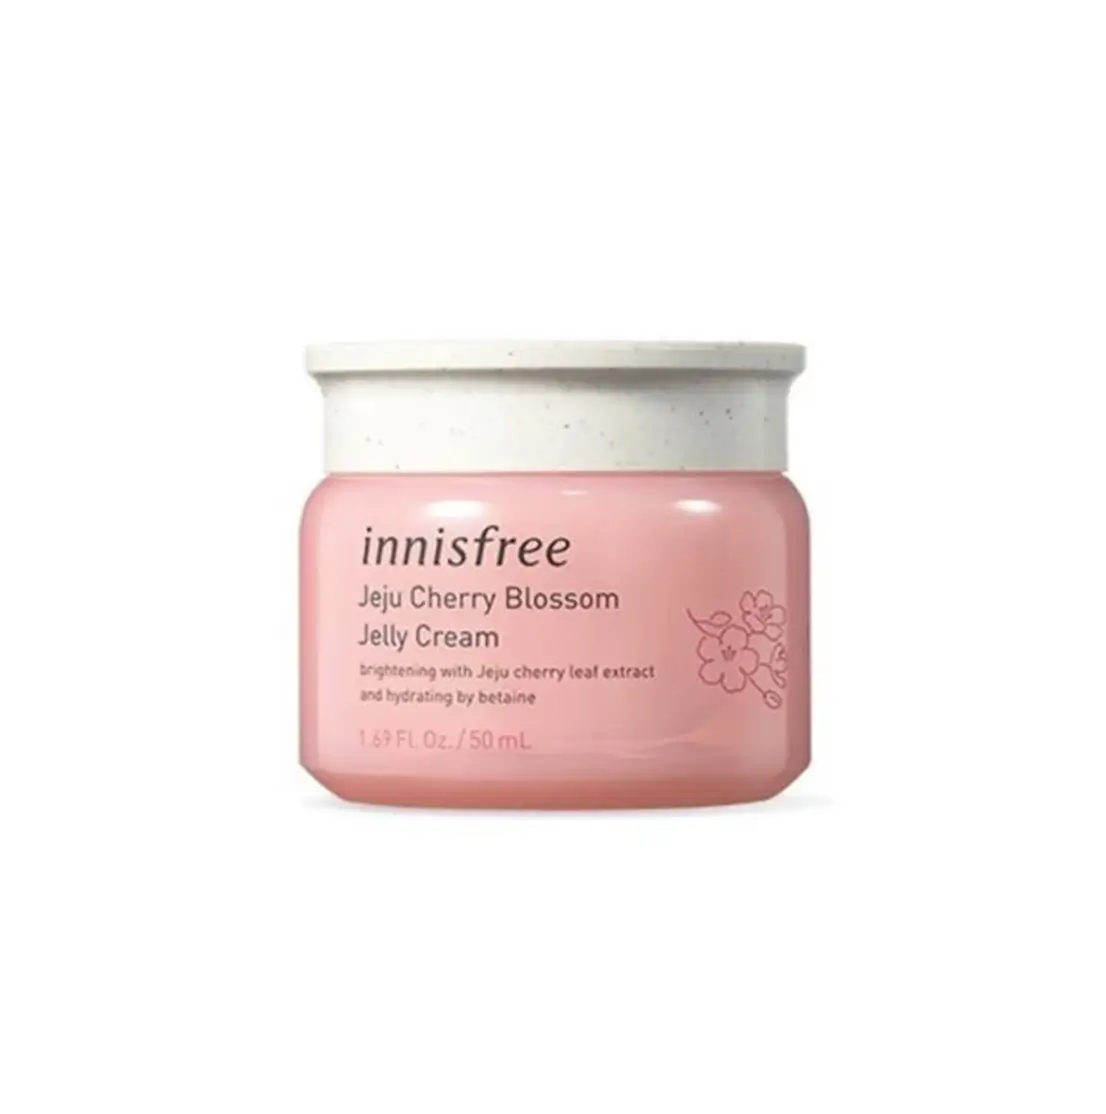 Best Korean skincare moisturiser- INNISFREE Jeju Cherry Blossom Jelly Cream​